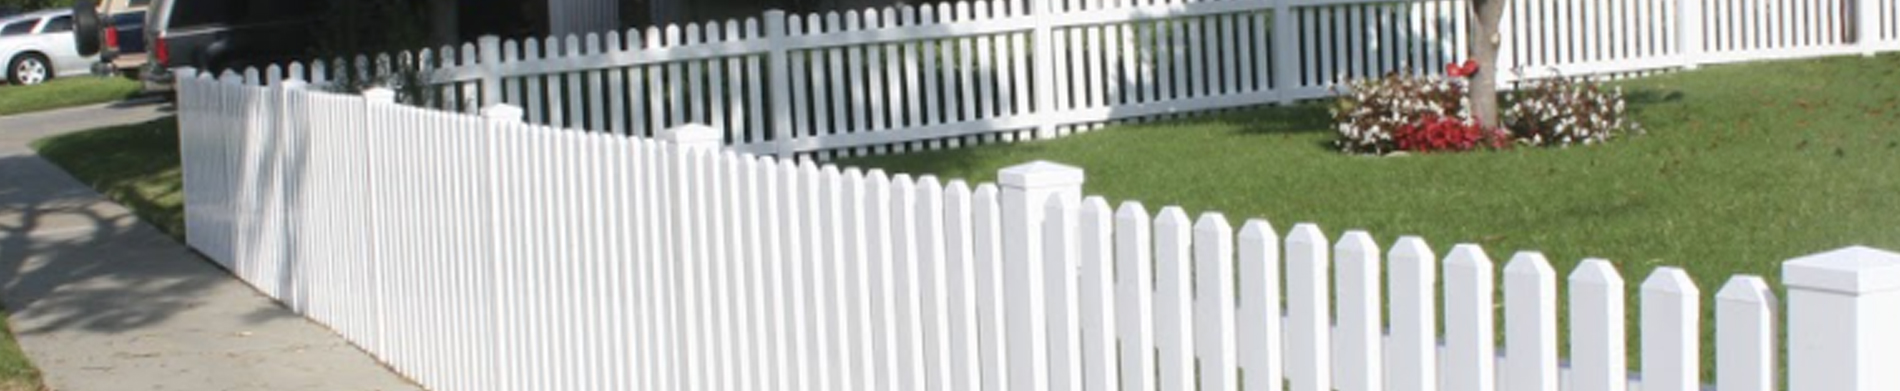 Install a Duramax vinyl fence – Choose an affordable vinyl fencing installation